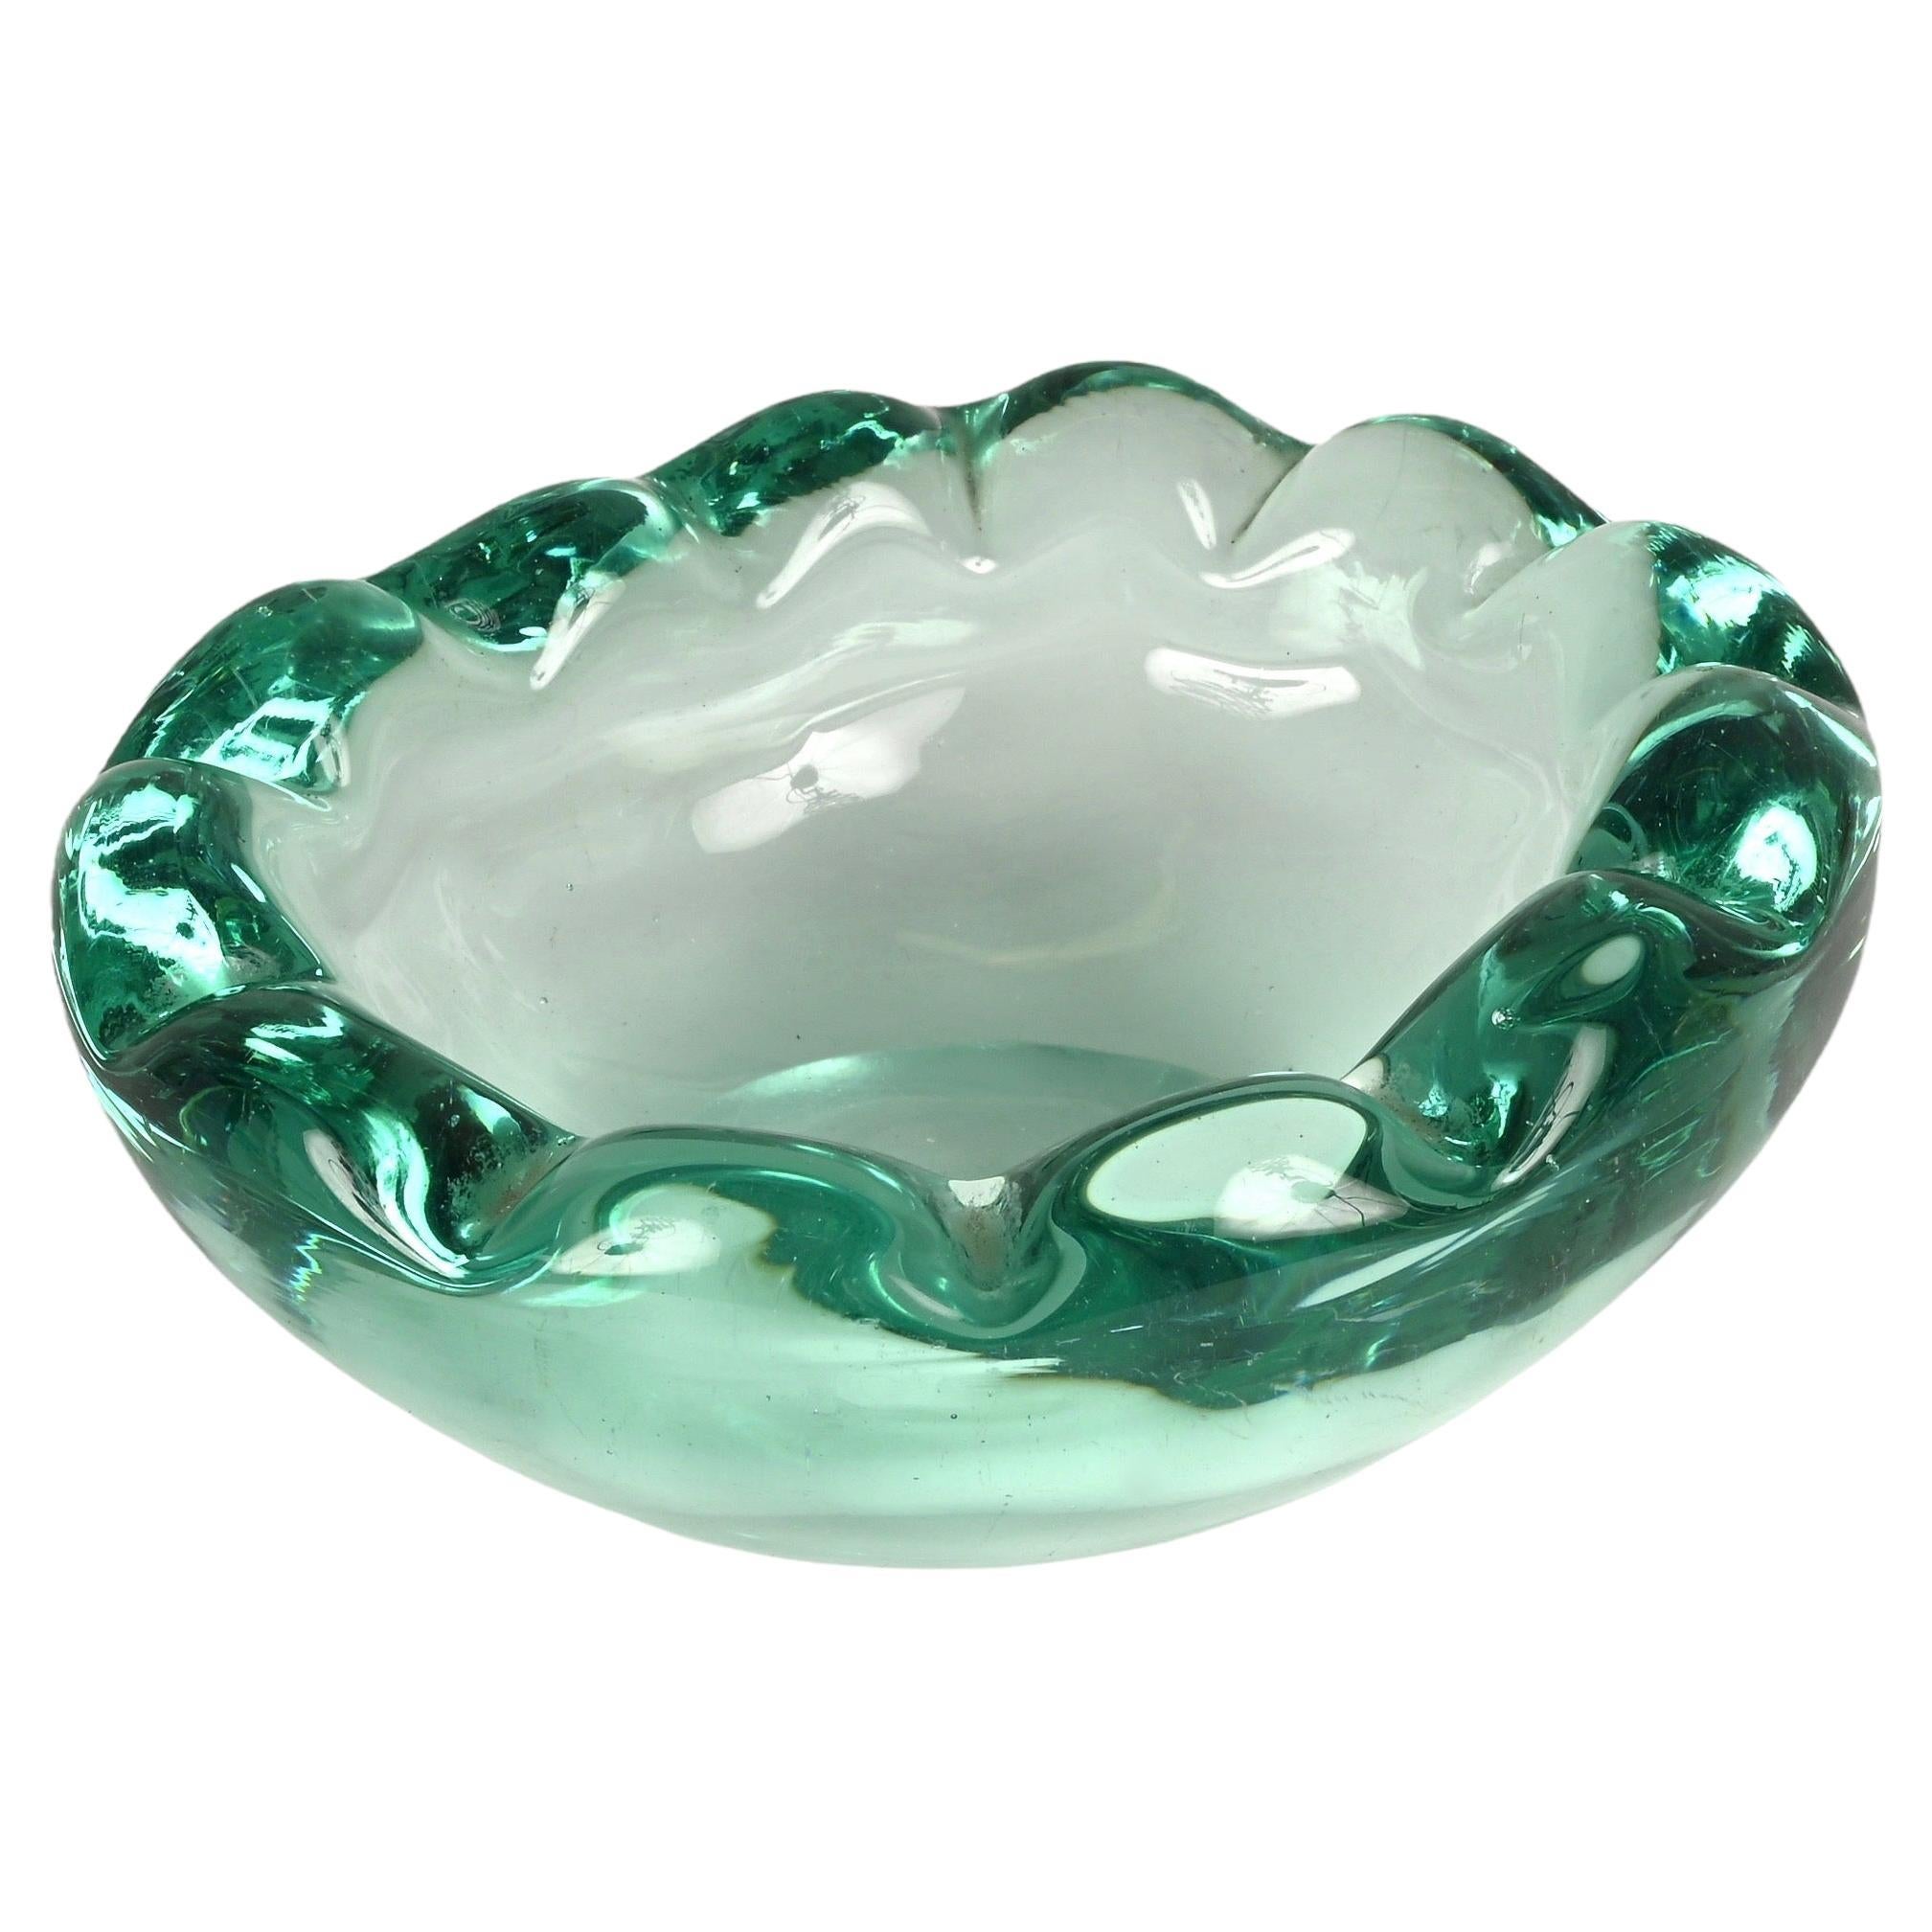 Mid-Century Sommerso Murano Crystal Green Glass Italian Decorative Bowl, 1960s